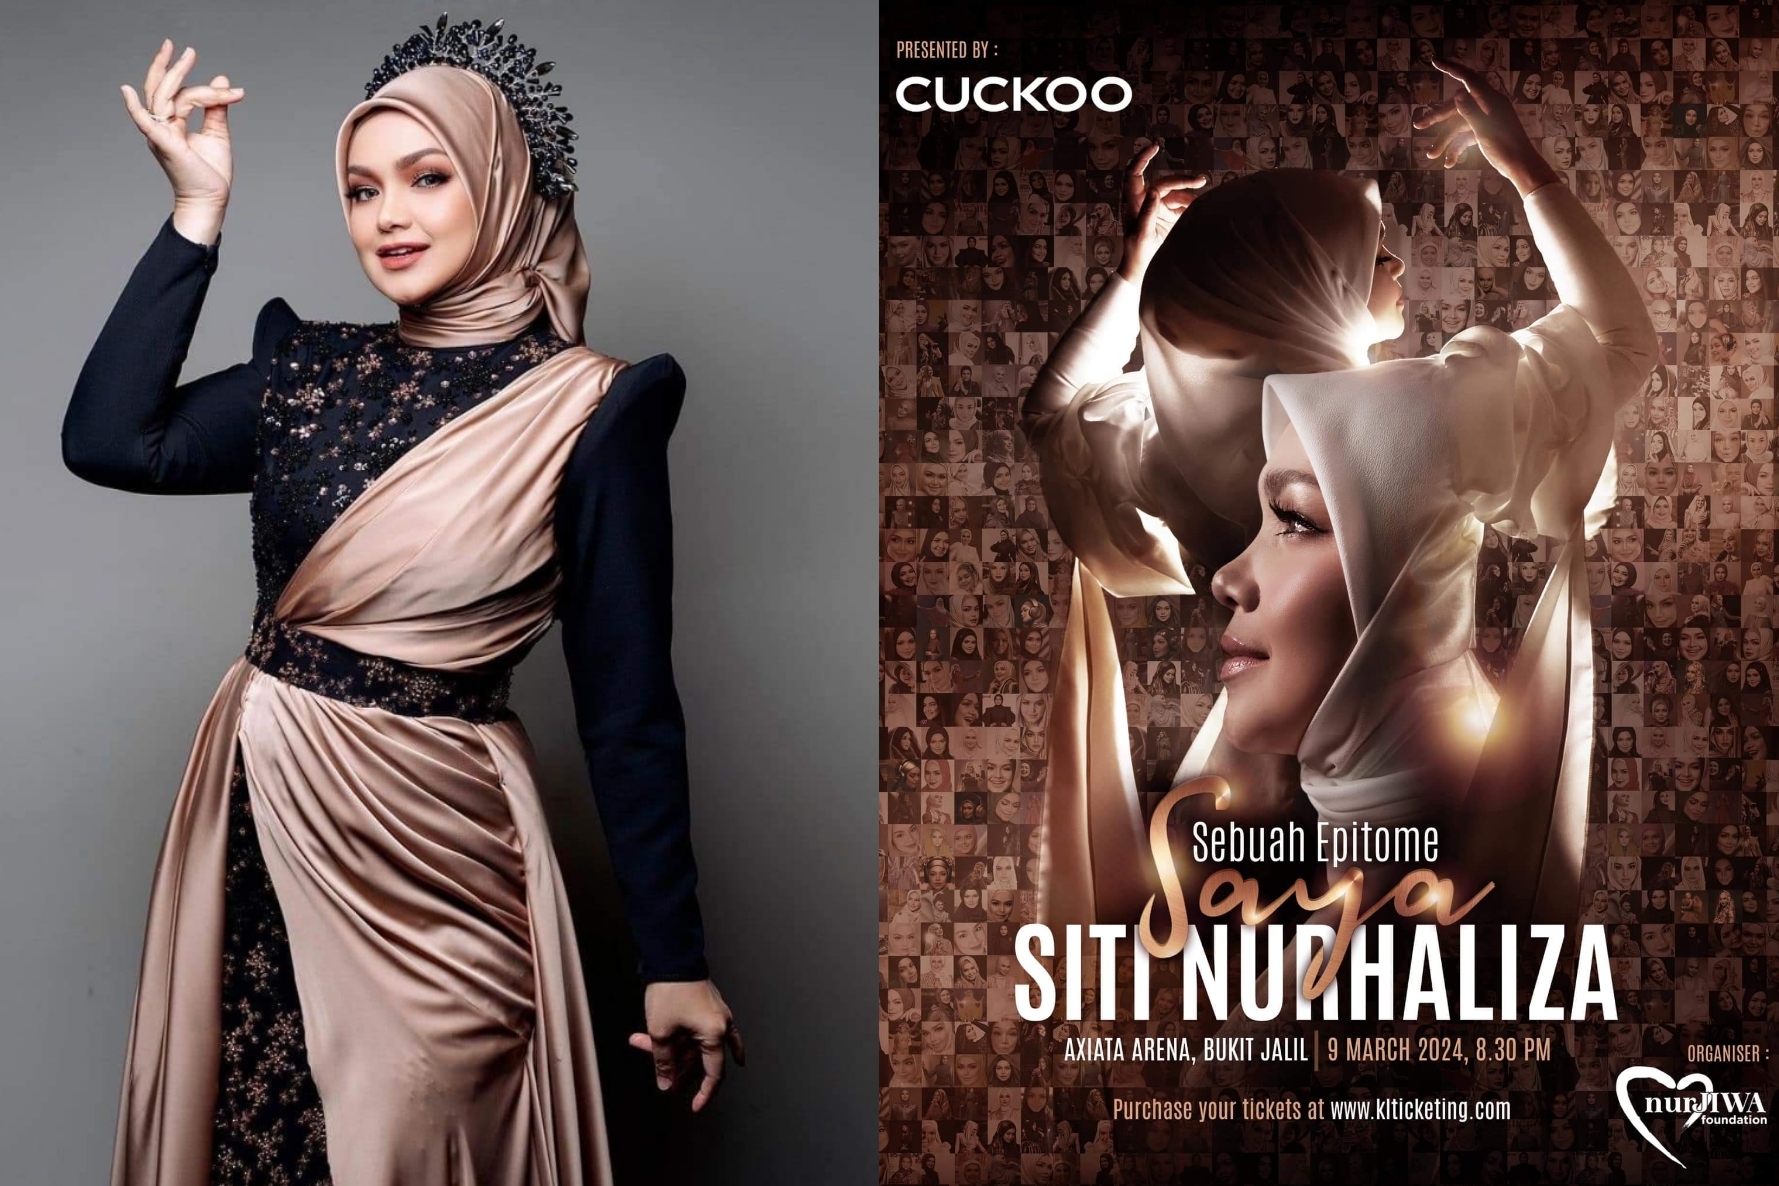 onsert 'Sebuah Epitome Saya Siti Nurhaliza'